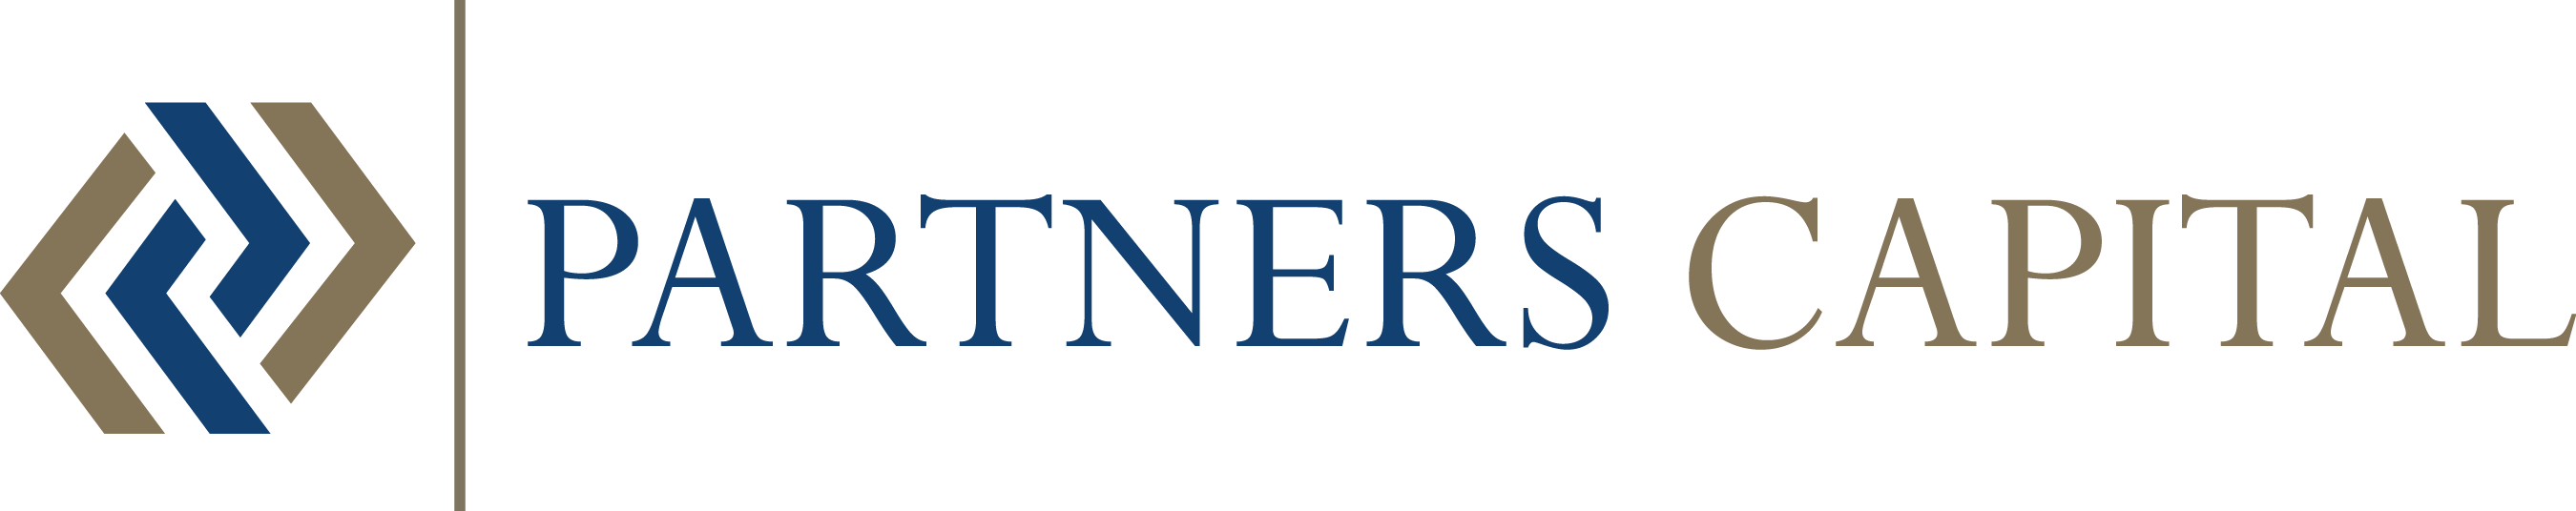 partnerscapital Logo